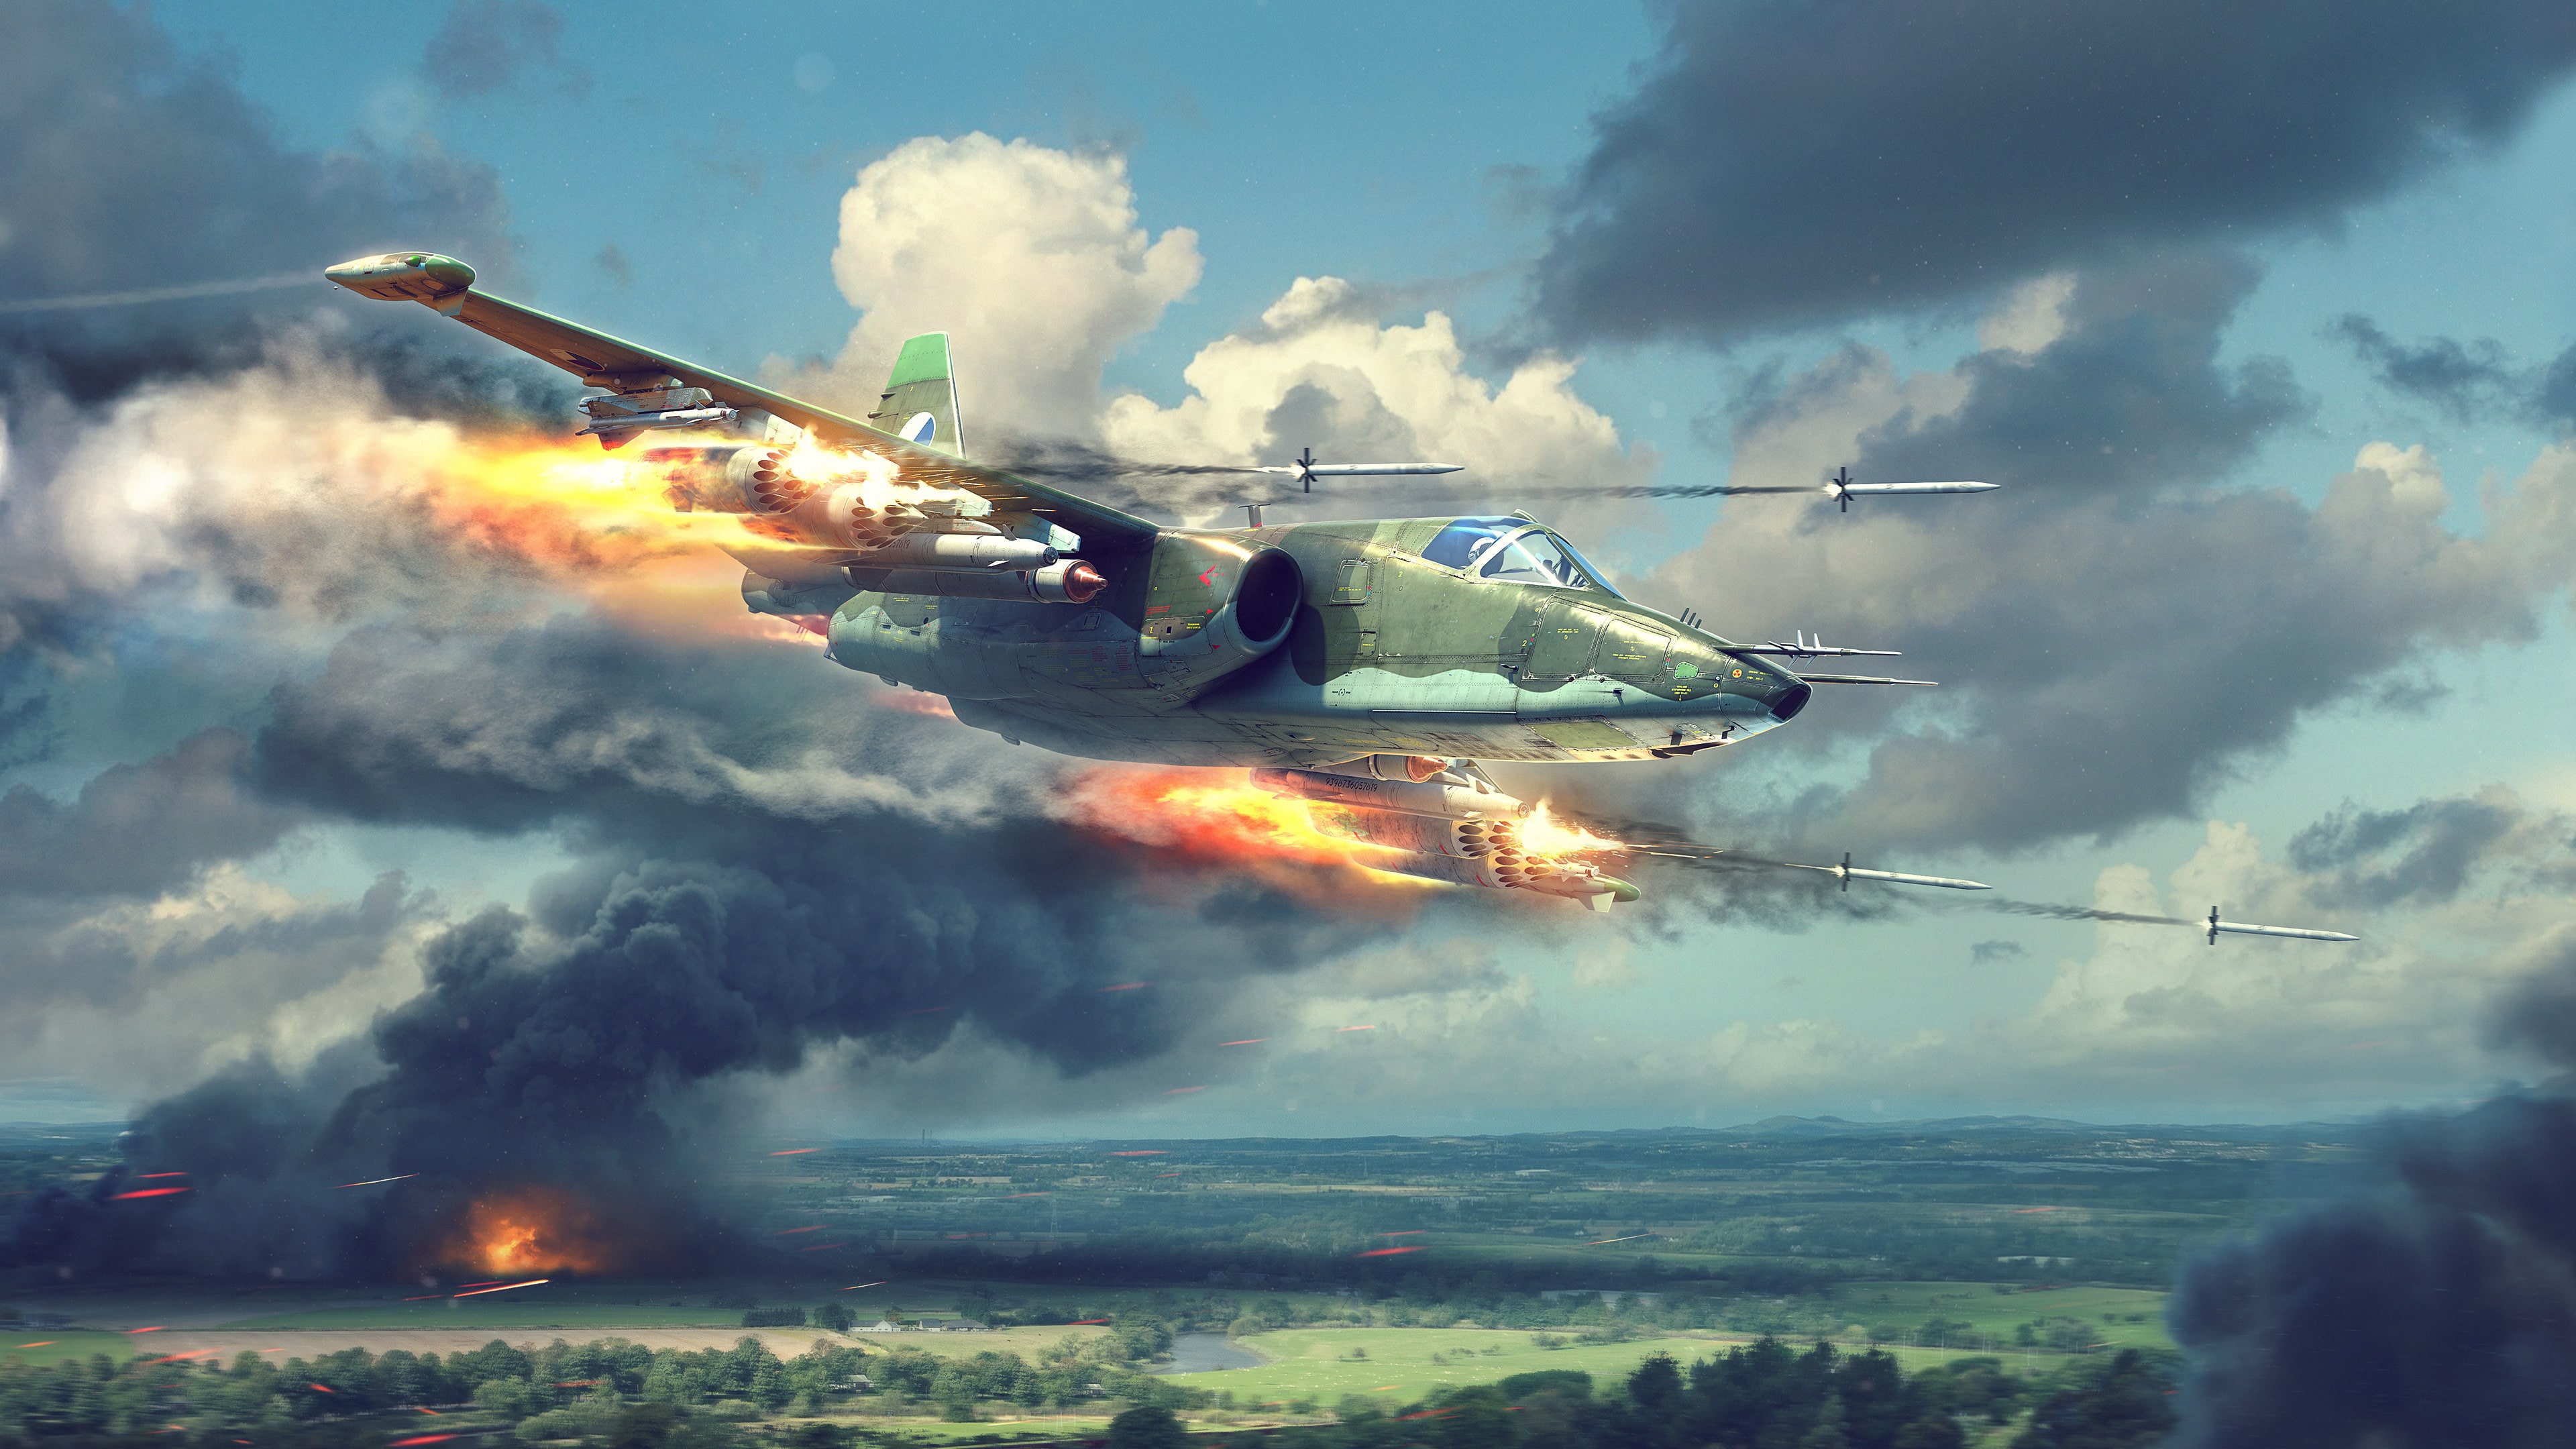 Sukhoi Aircraft Sky Clouds War Rocket Fire Smoke Artwork SU 25 Frogfoot Military 3840x2160